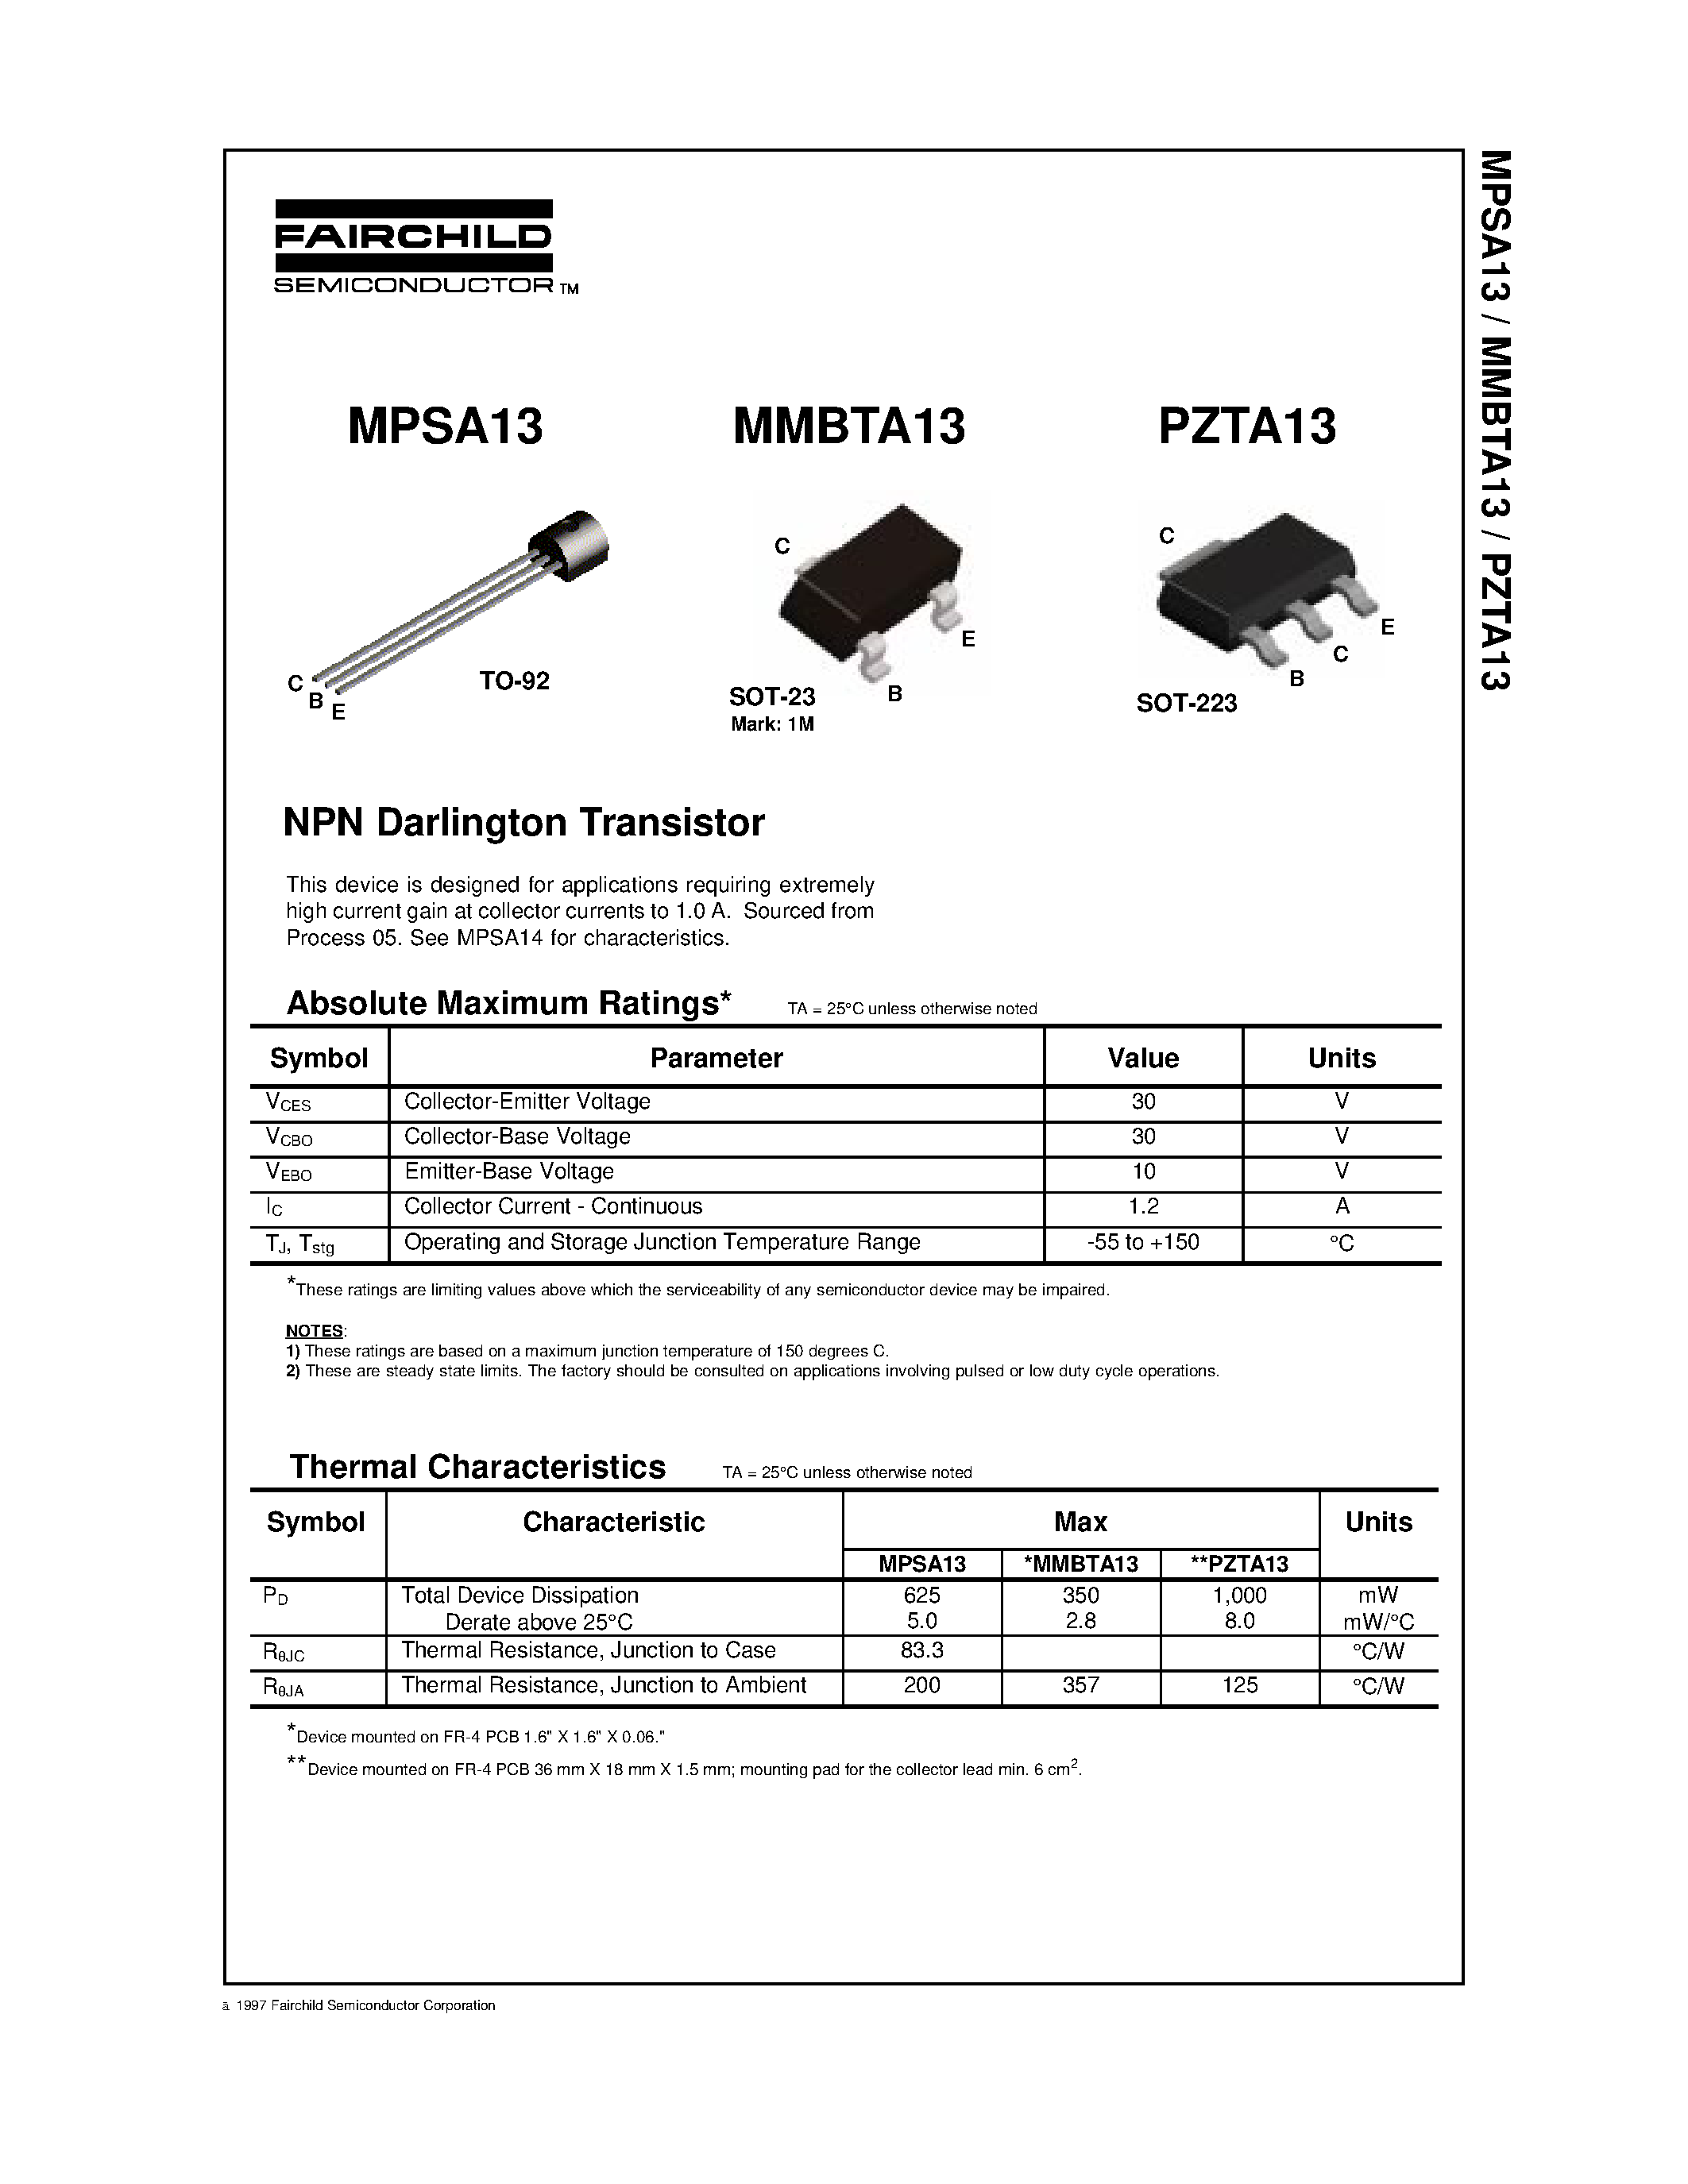 Datasheet PZTA13 - NPN Darlington Transistor page 1